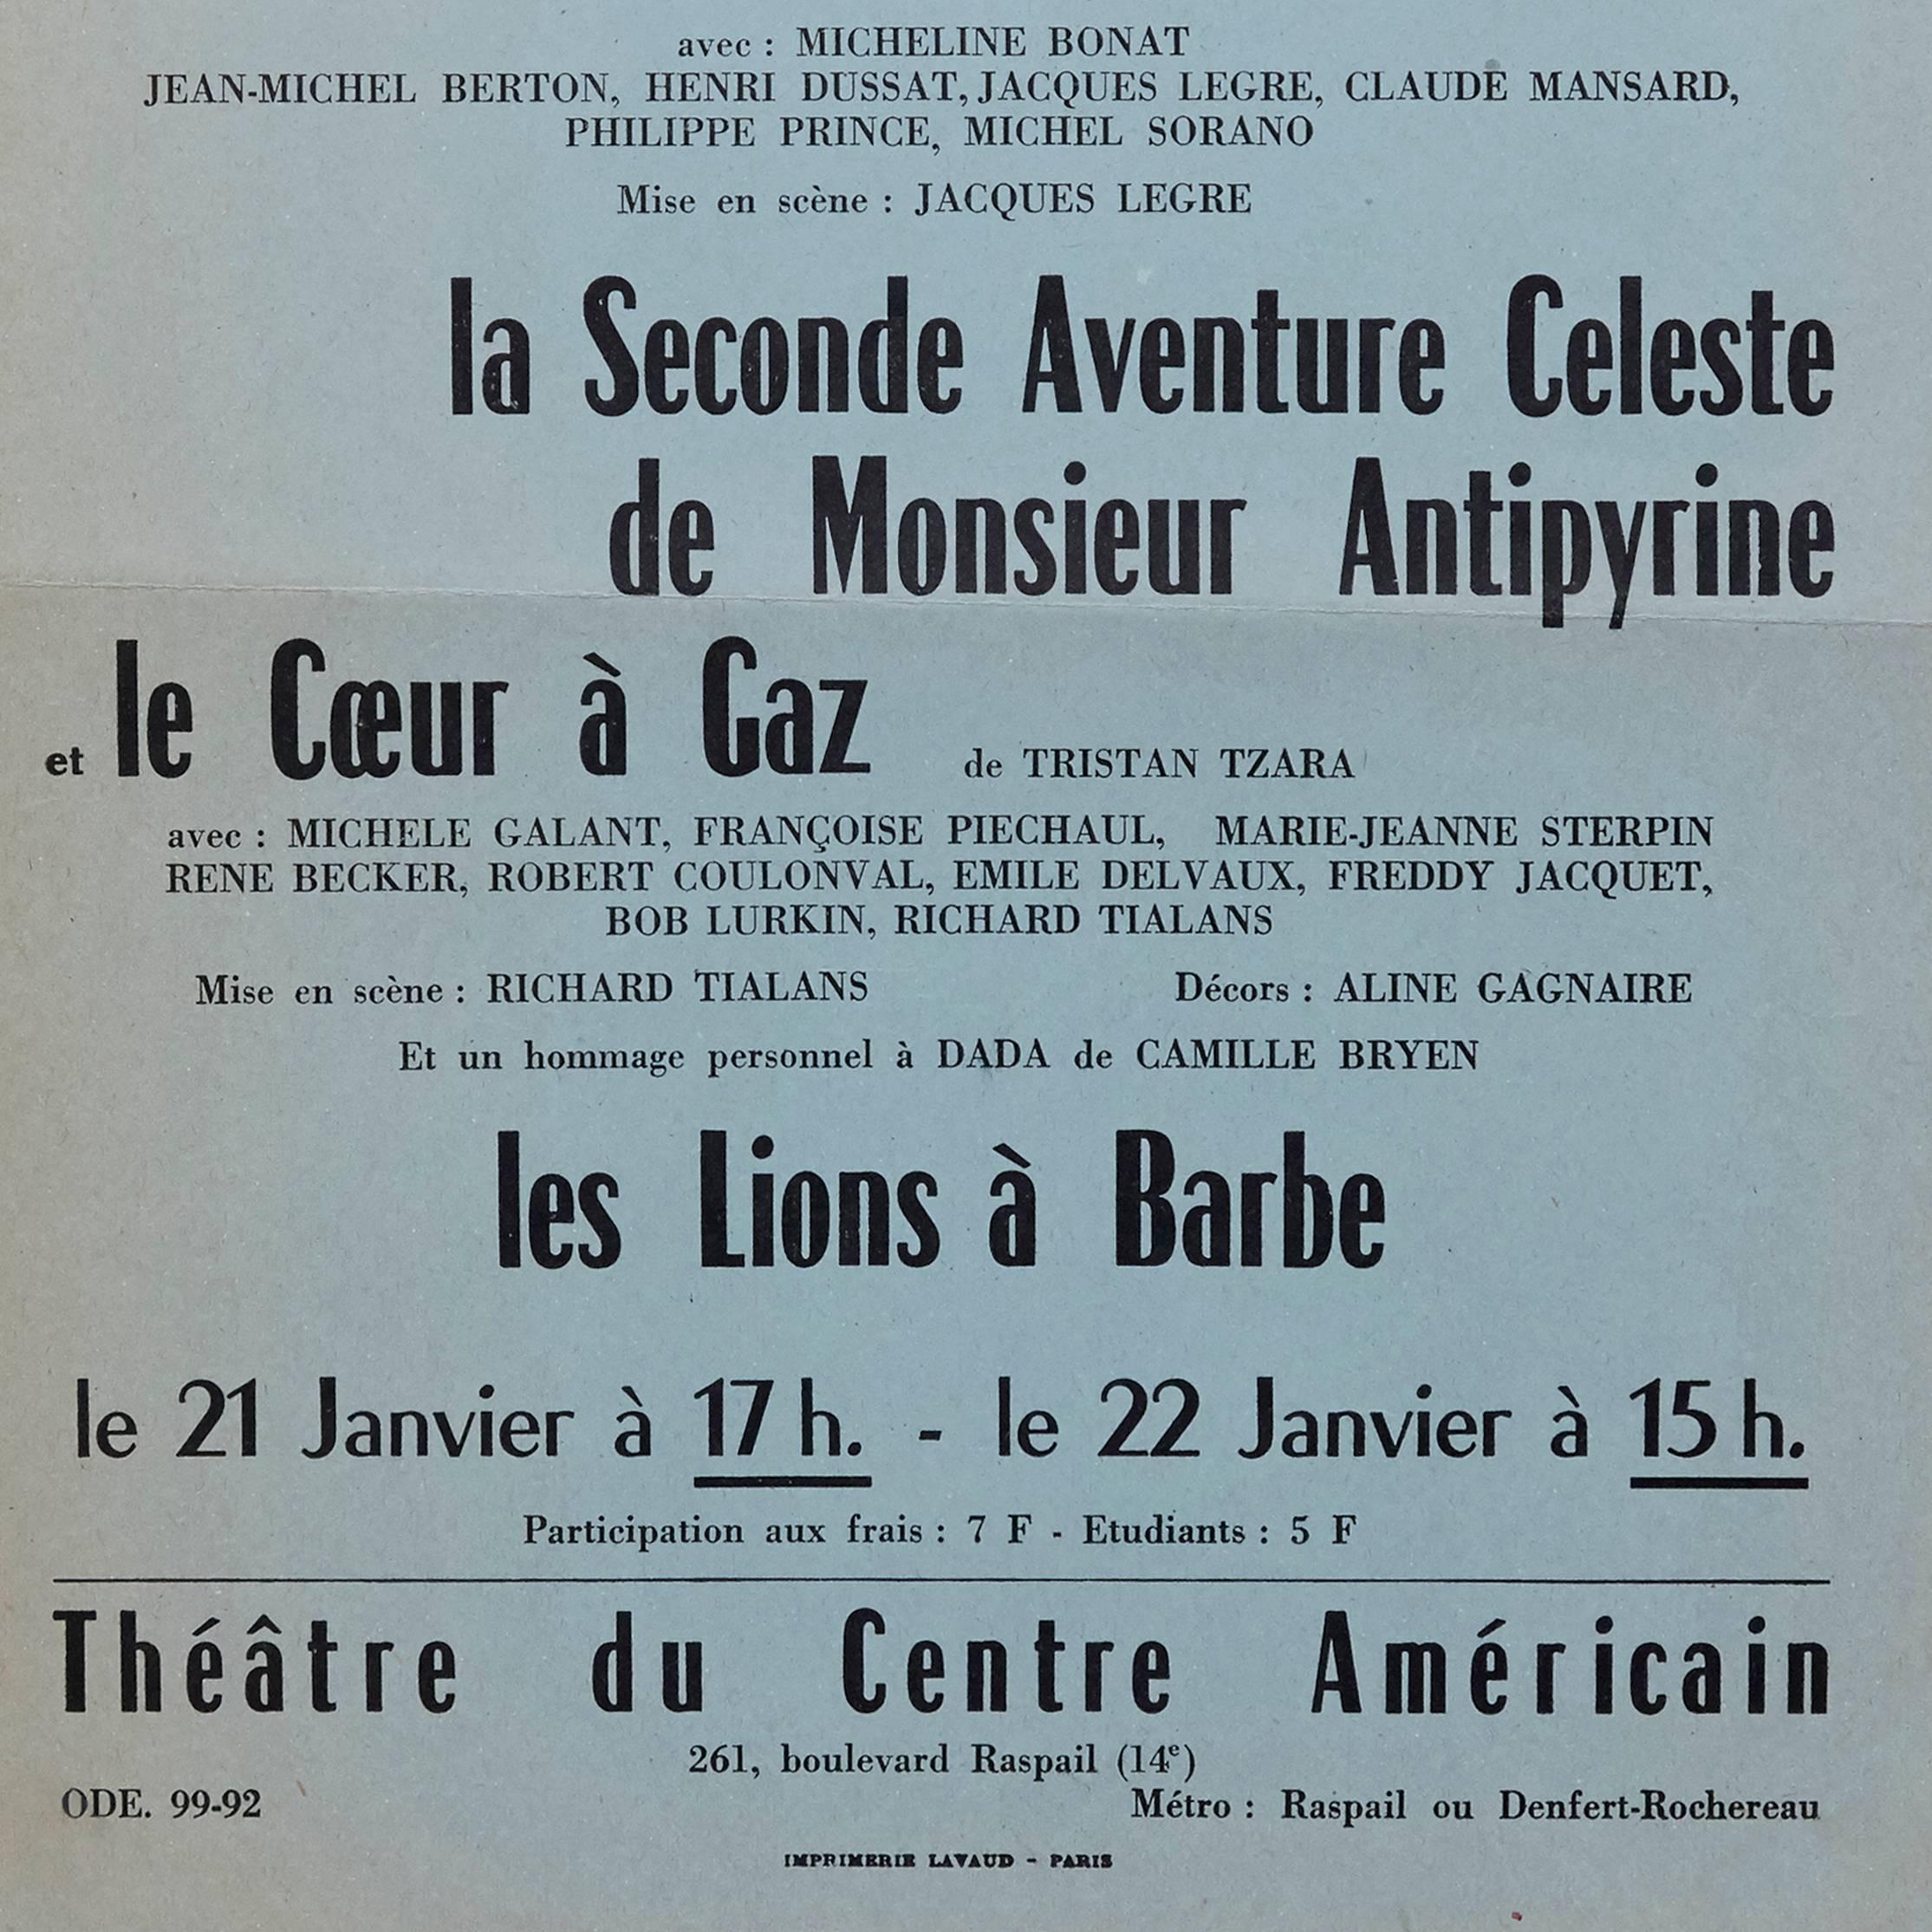 French Spectacle Dada Tristan Tzara Ribemont-Dessaignes Coeur a Gaz Bryen, 1960s For Sale